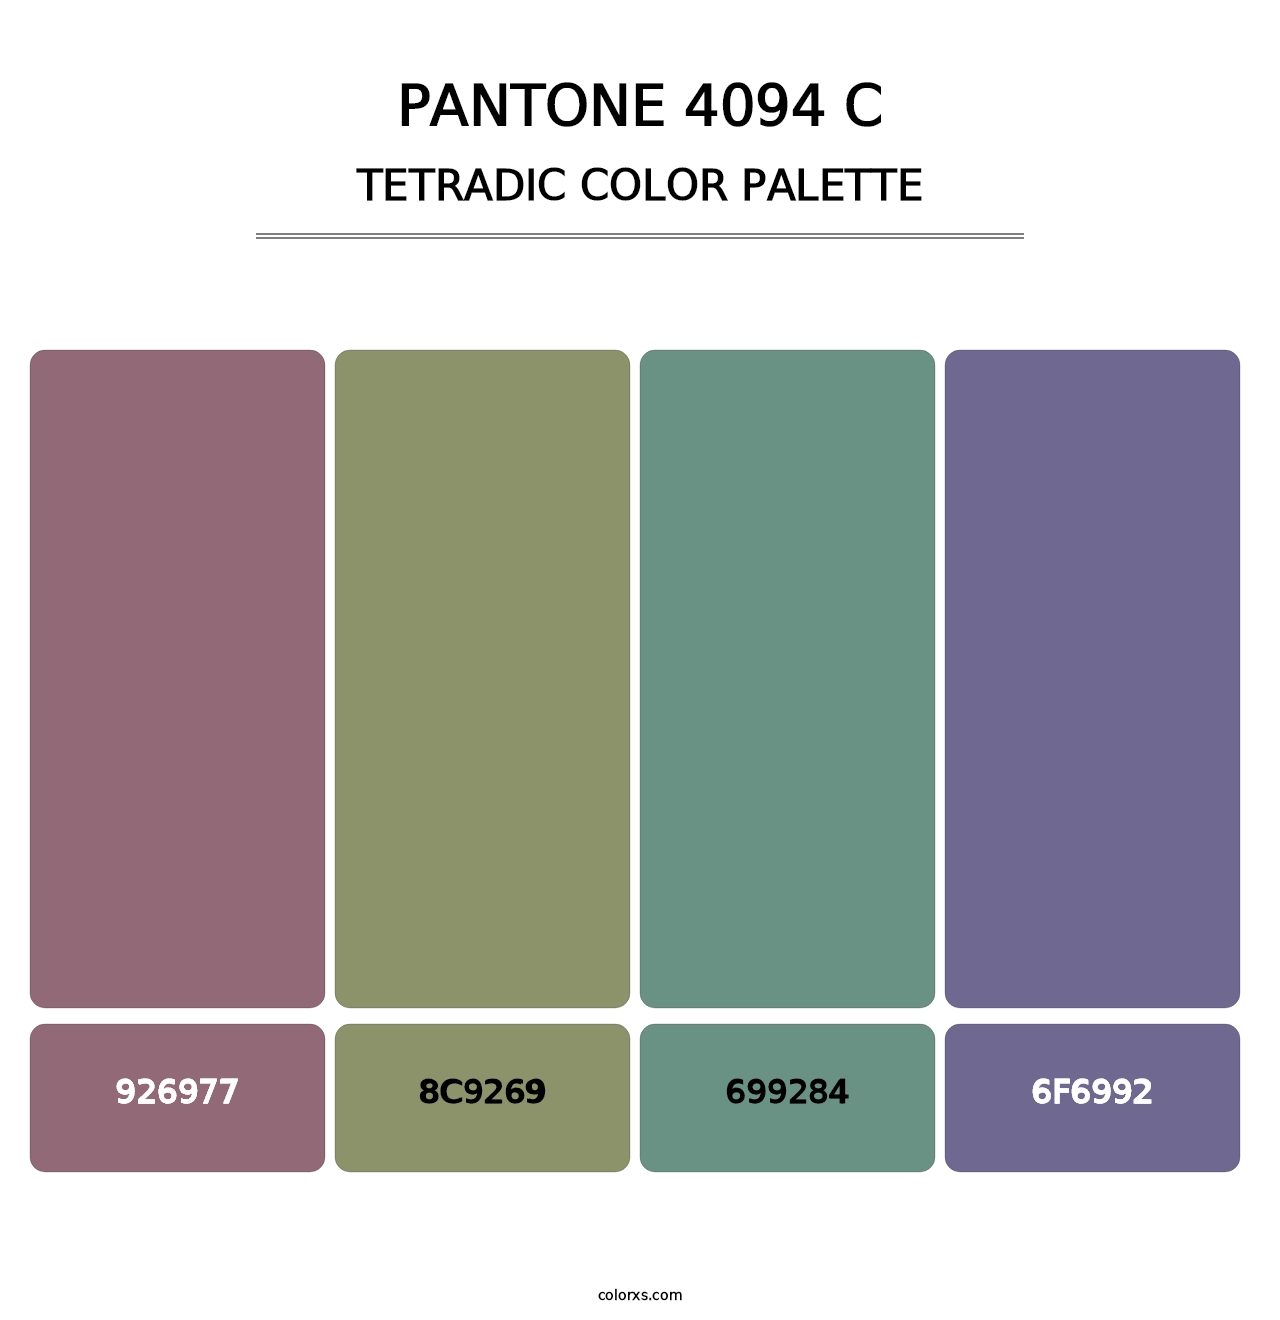 PANTONE 4094 C - Tetradic Color Palette